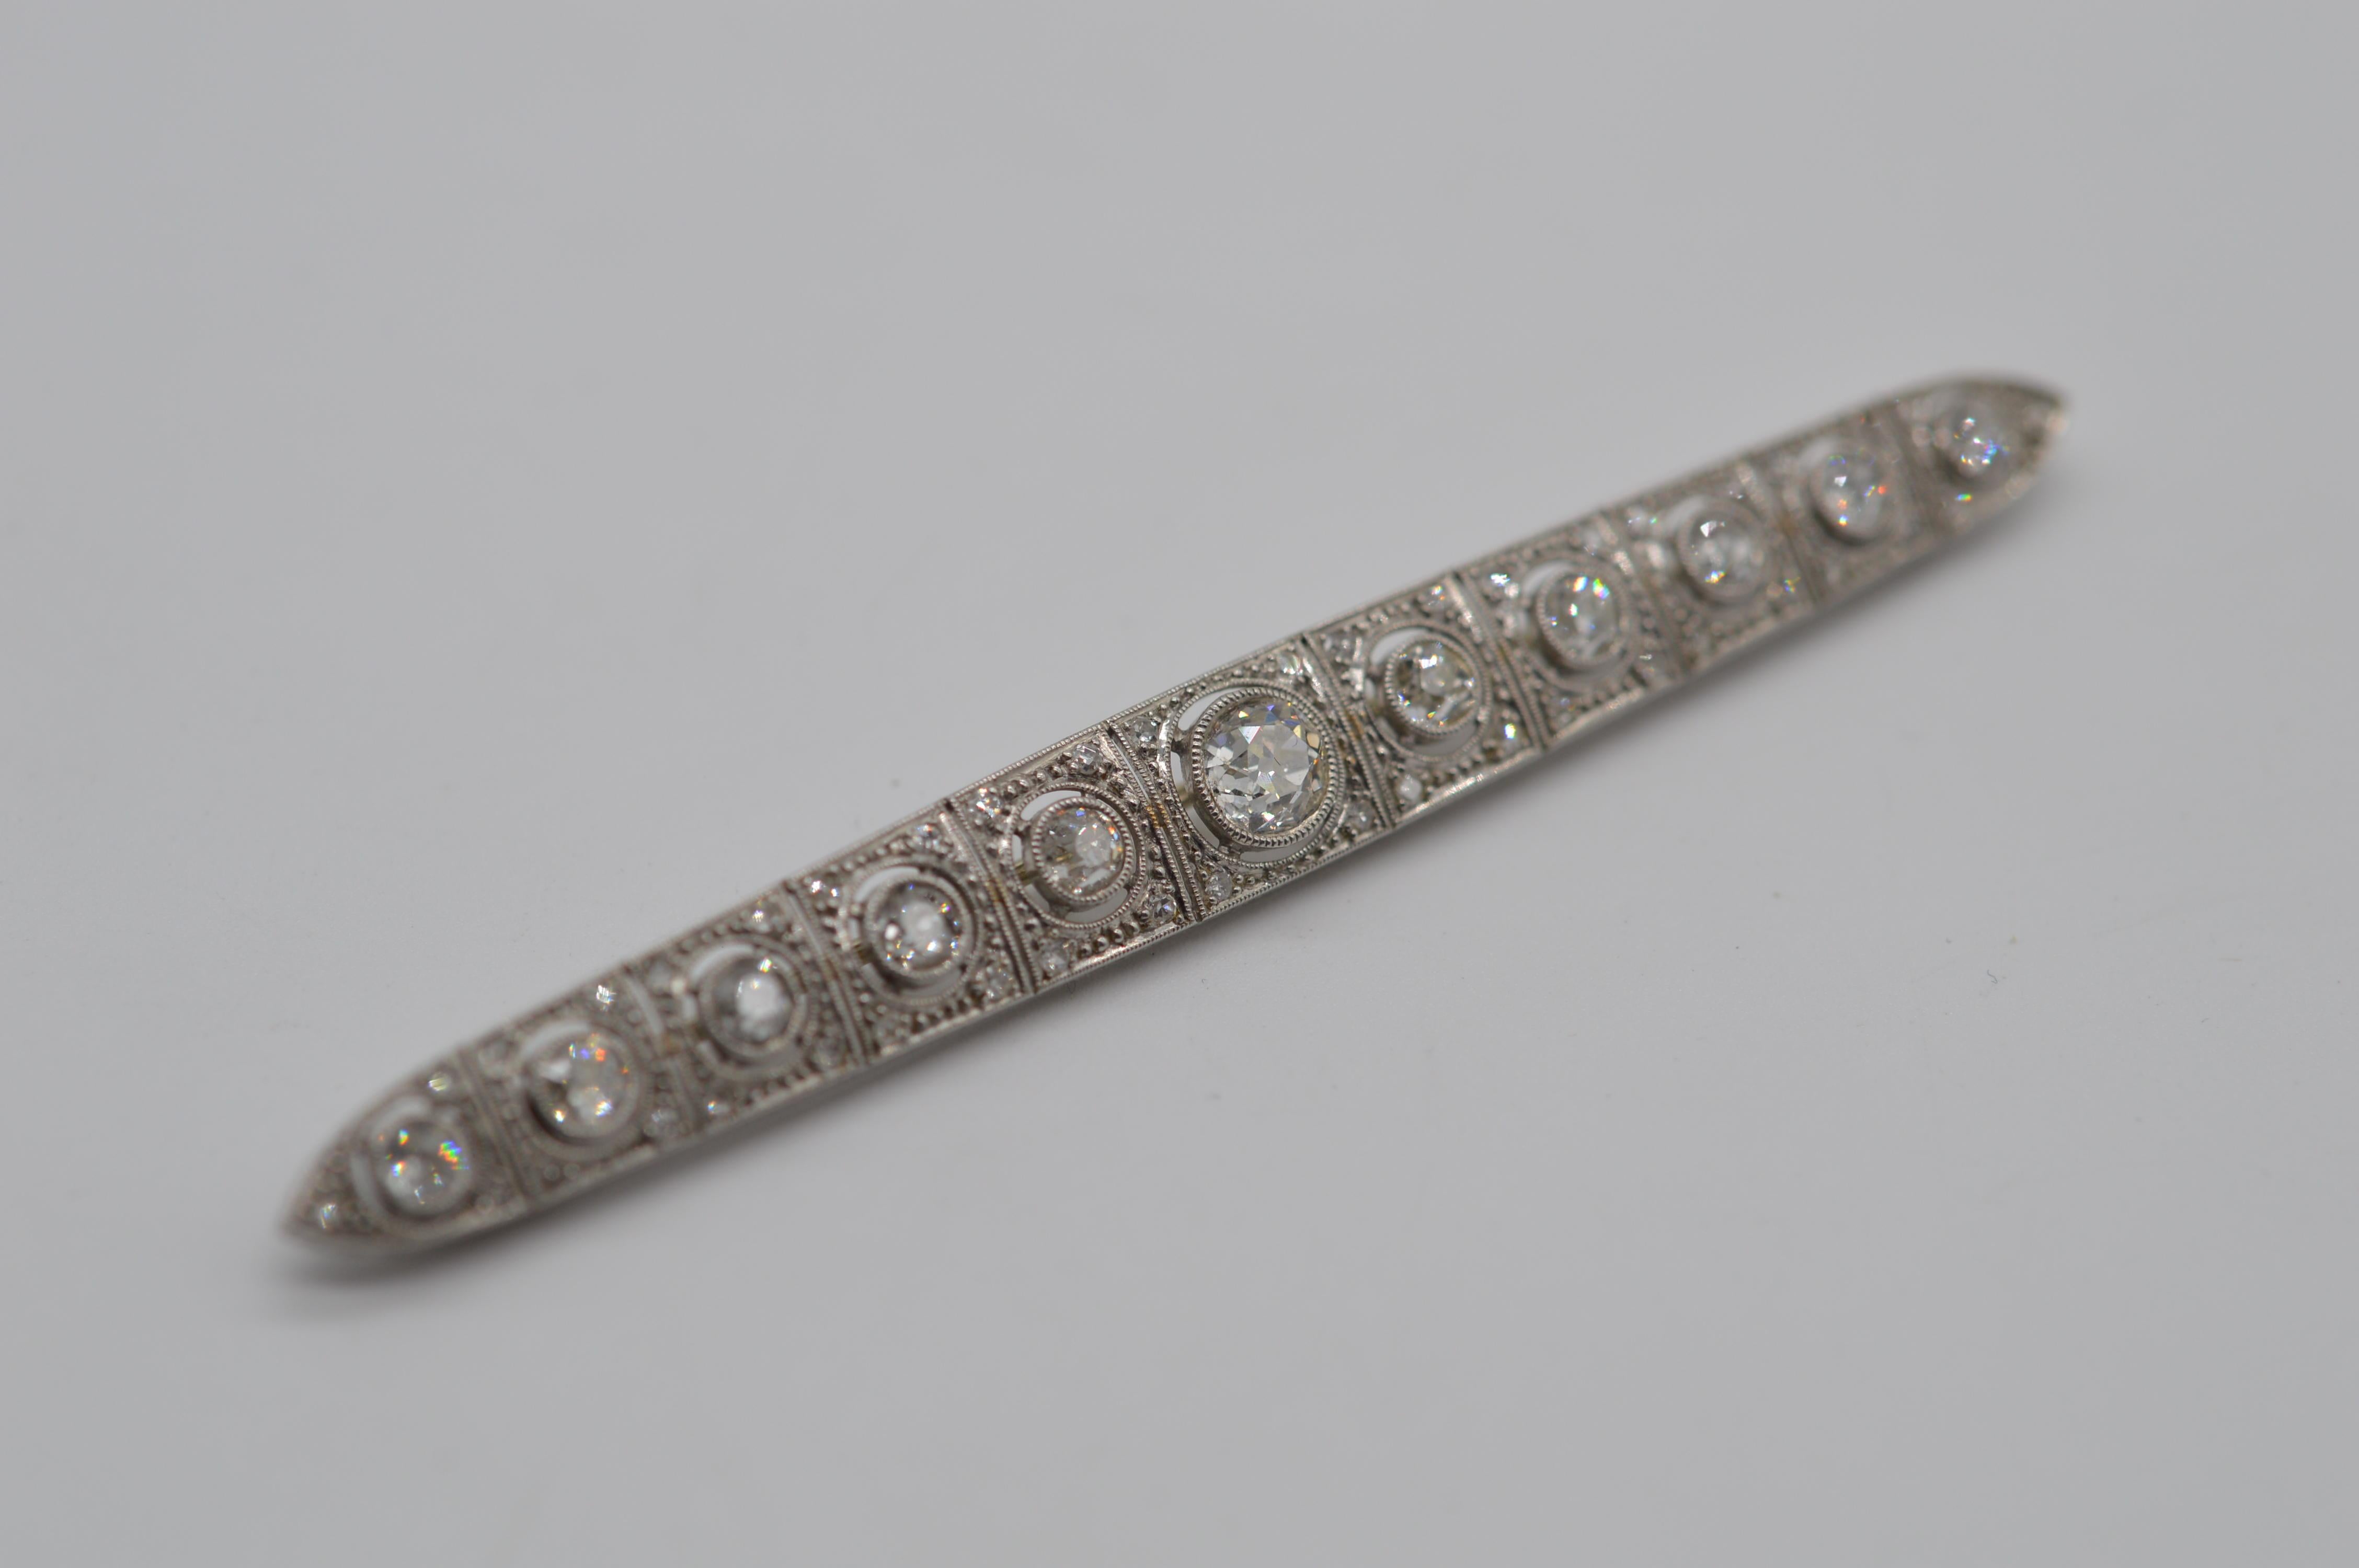 Antique & Elegant Platinum Diamond Brooch Bar-Pin
Features 11 Large Old Mine Cut Diamond & 42 small 